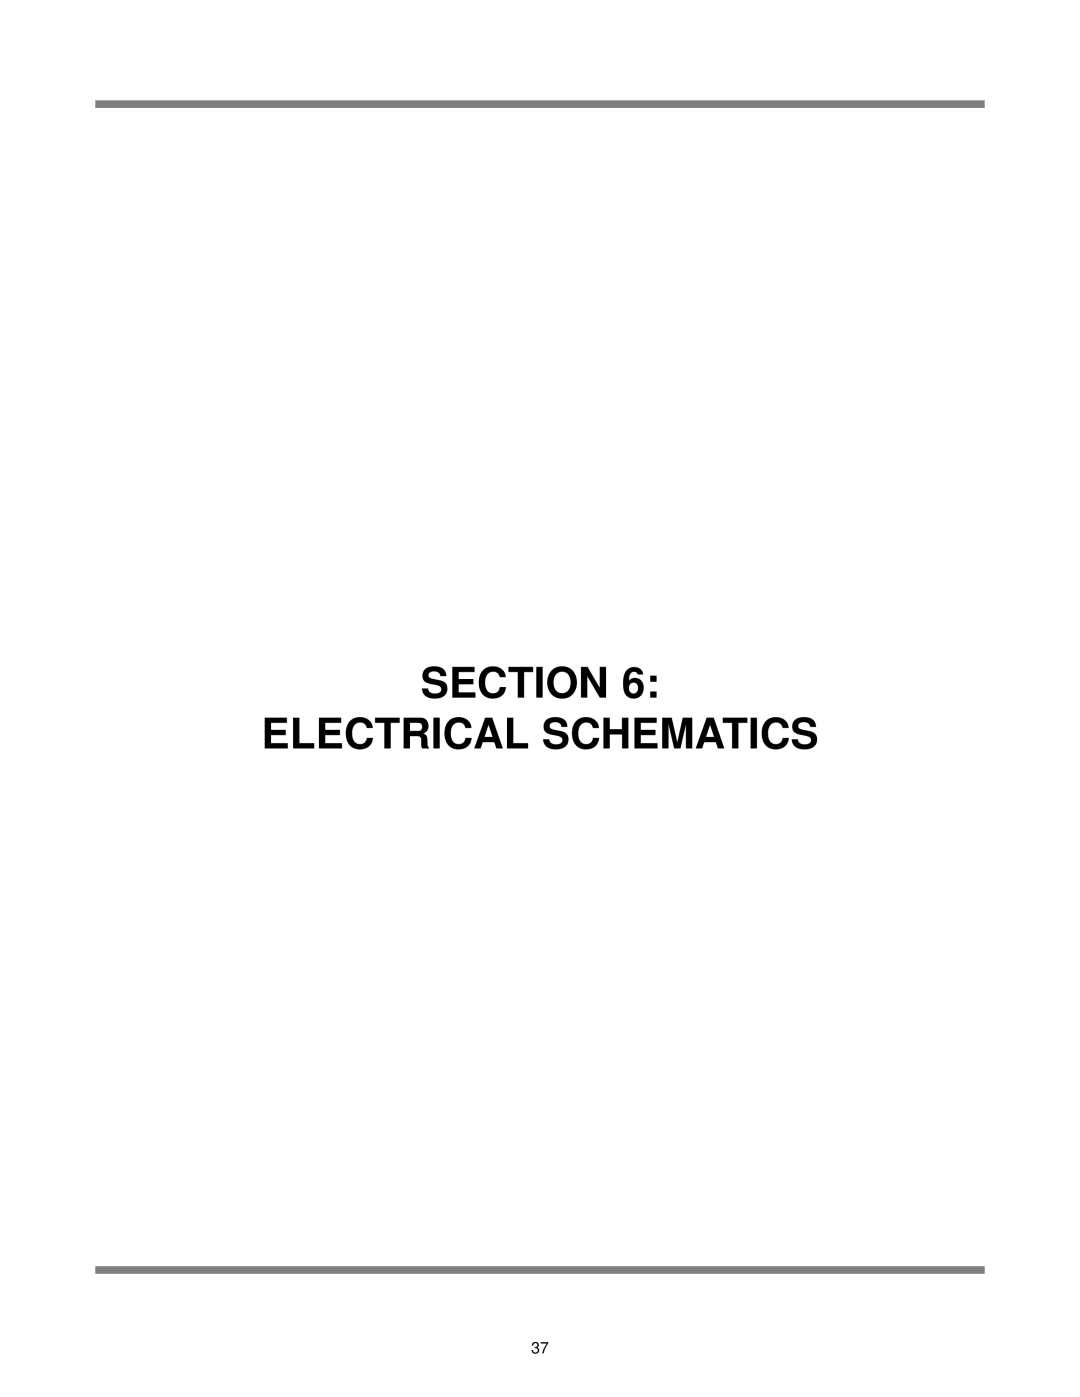 Jackson DELTA 5 D, Delta 5 technical manual Section Electrical Schematics 